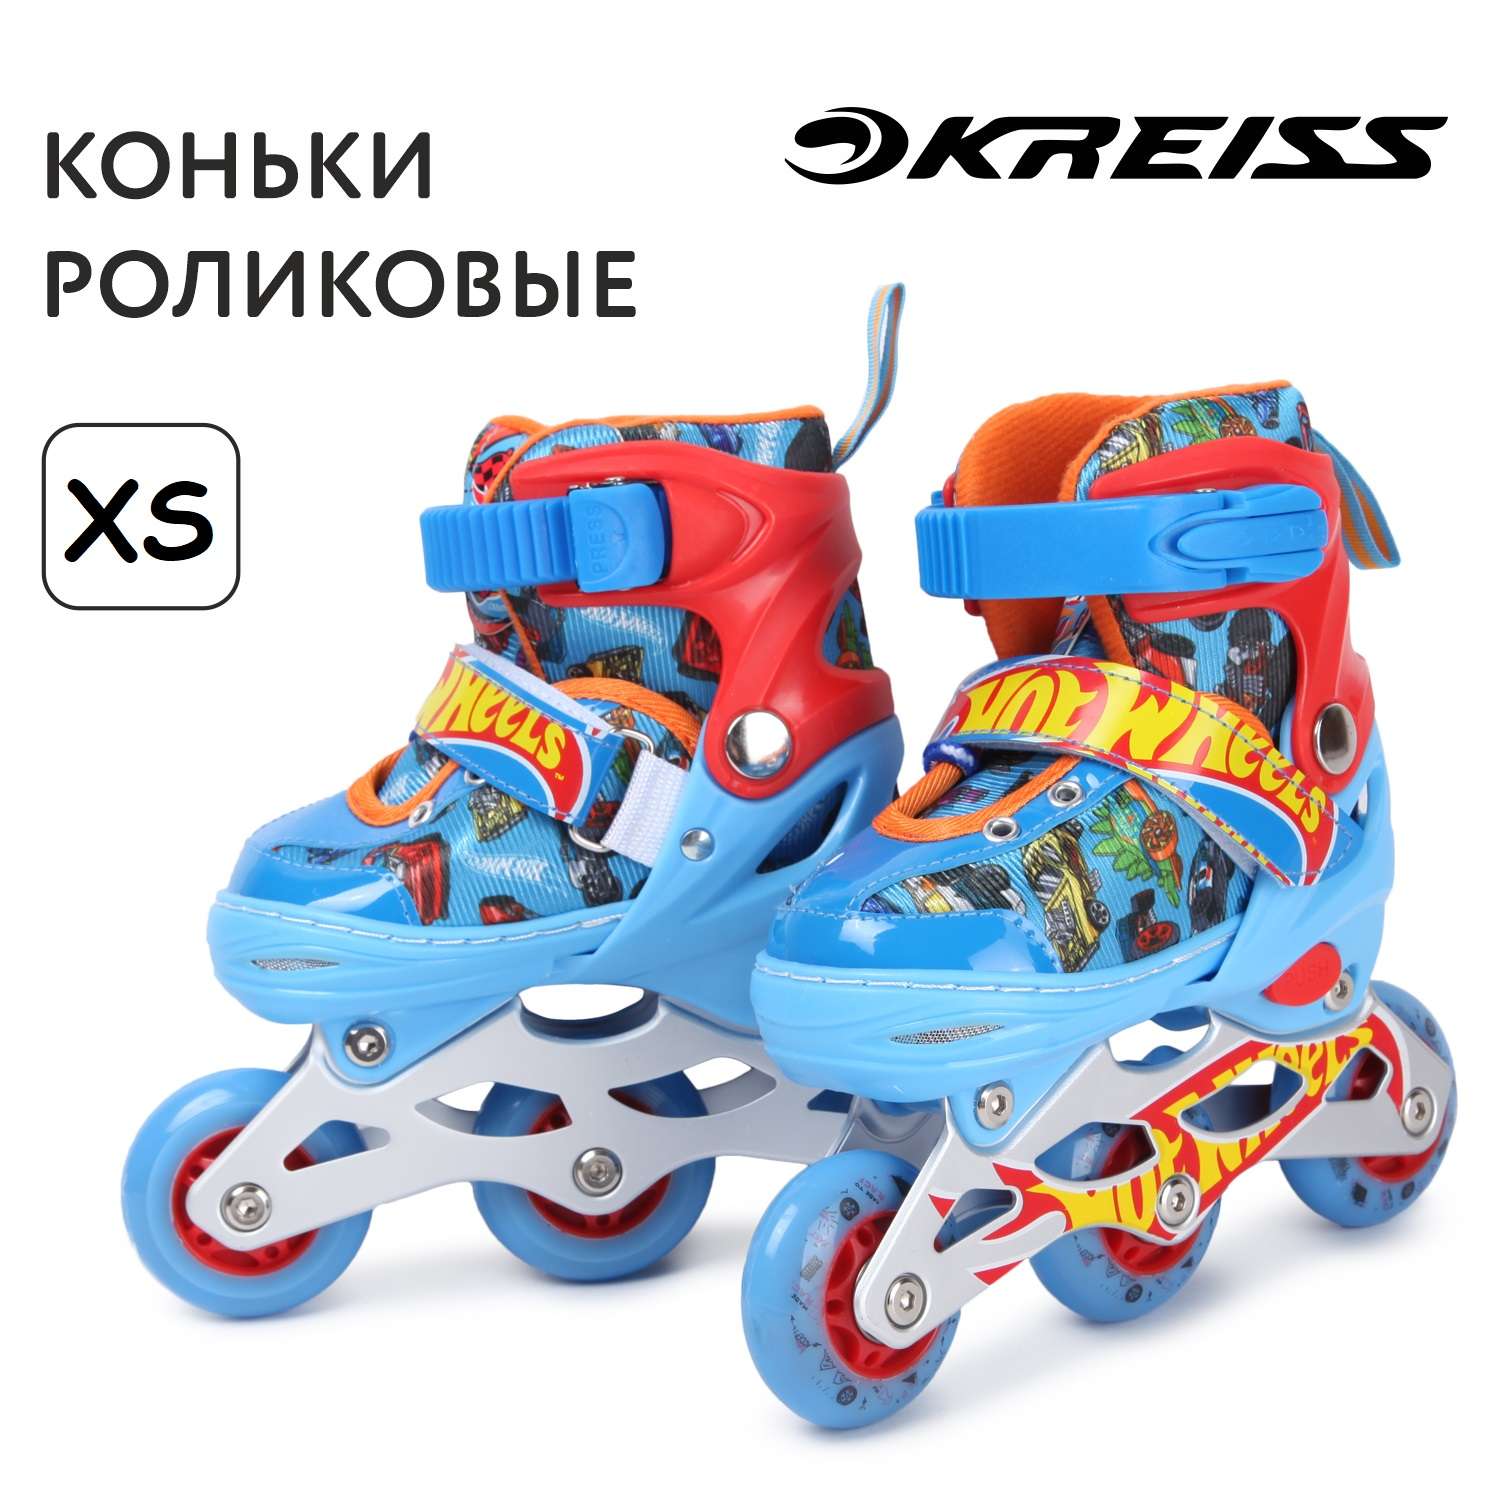 Коньки роликовые Kreiss Hot Wheels XS - фото 1